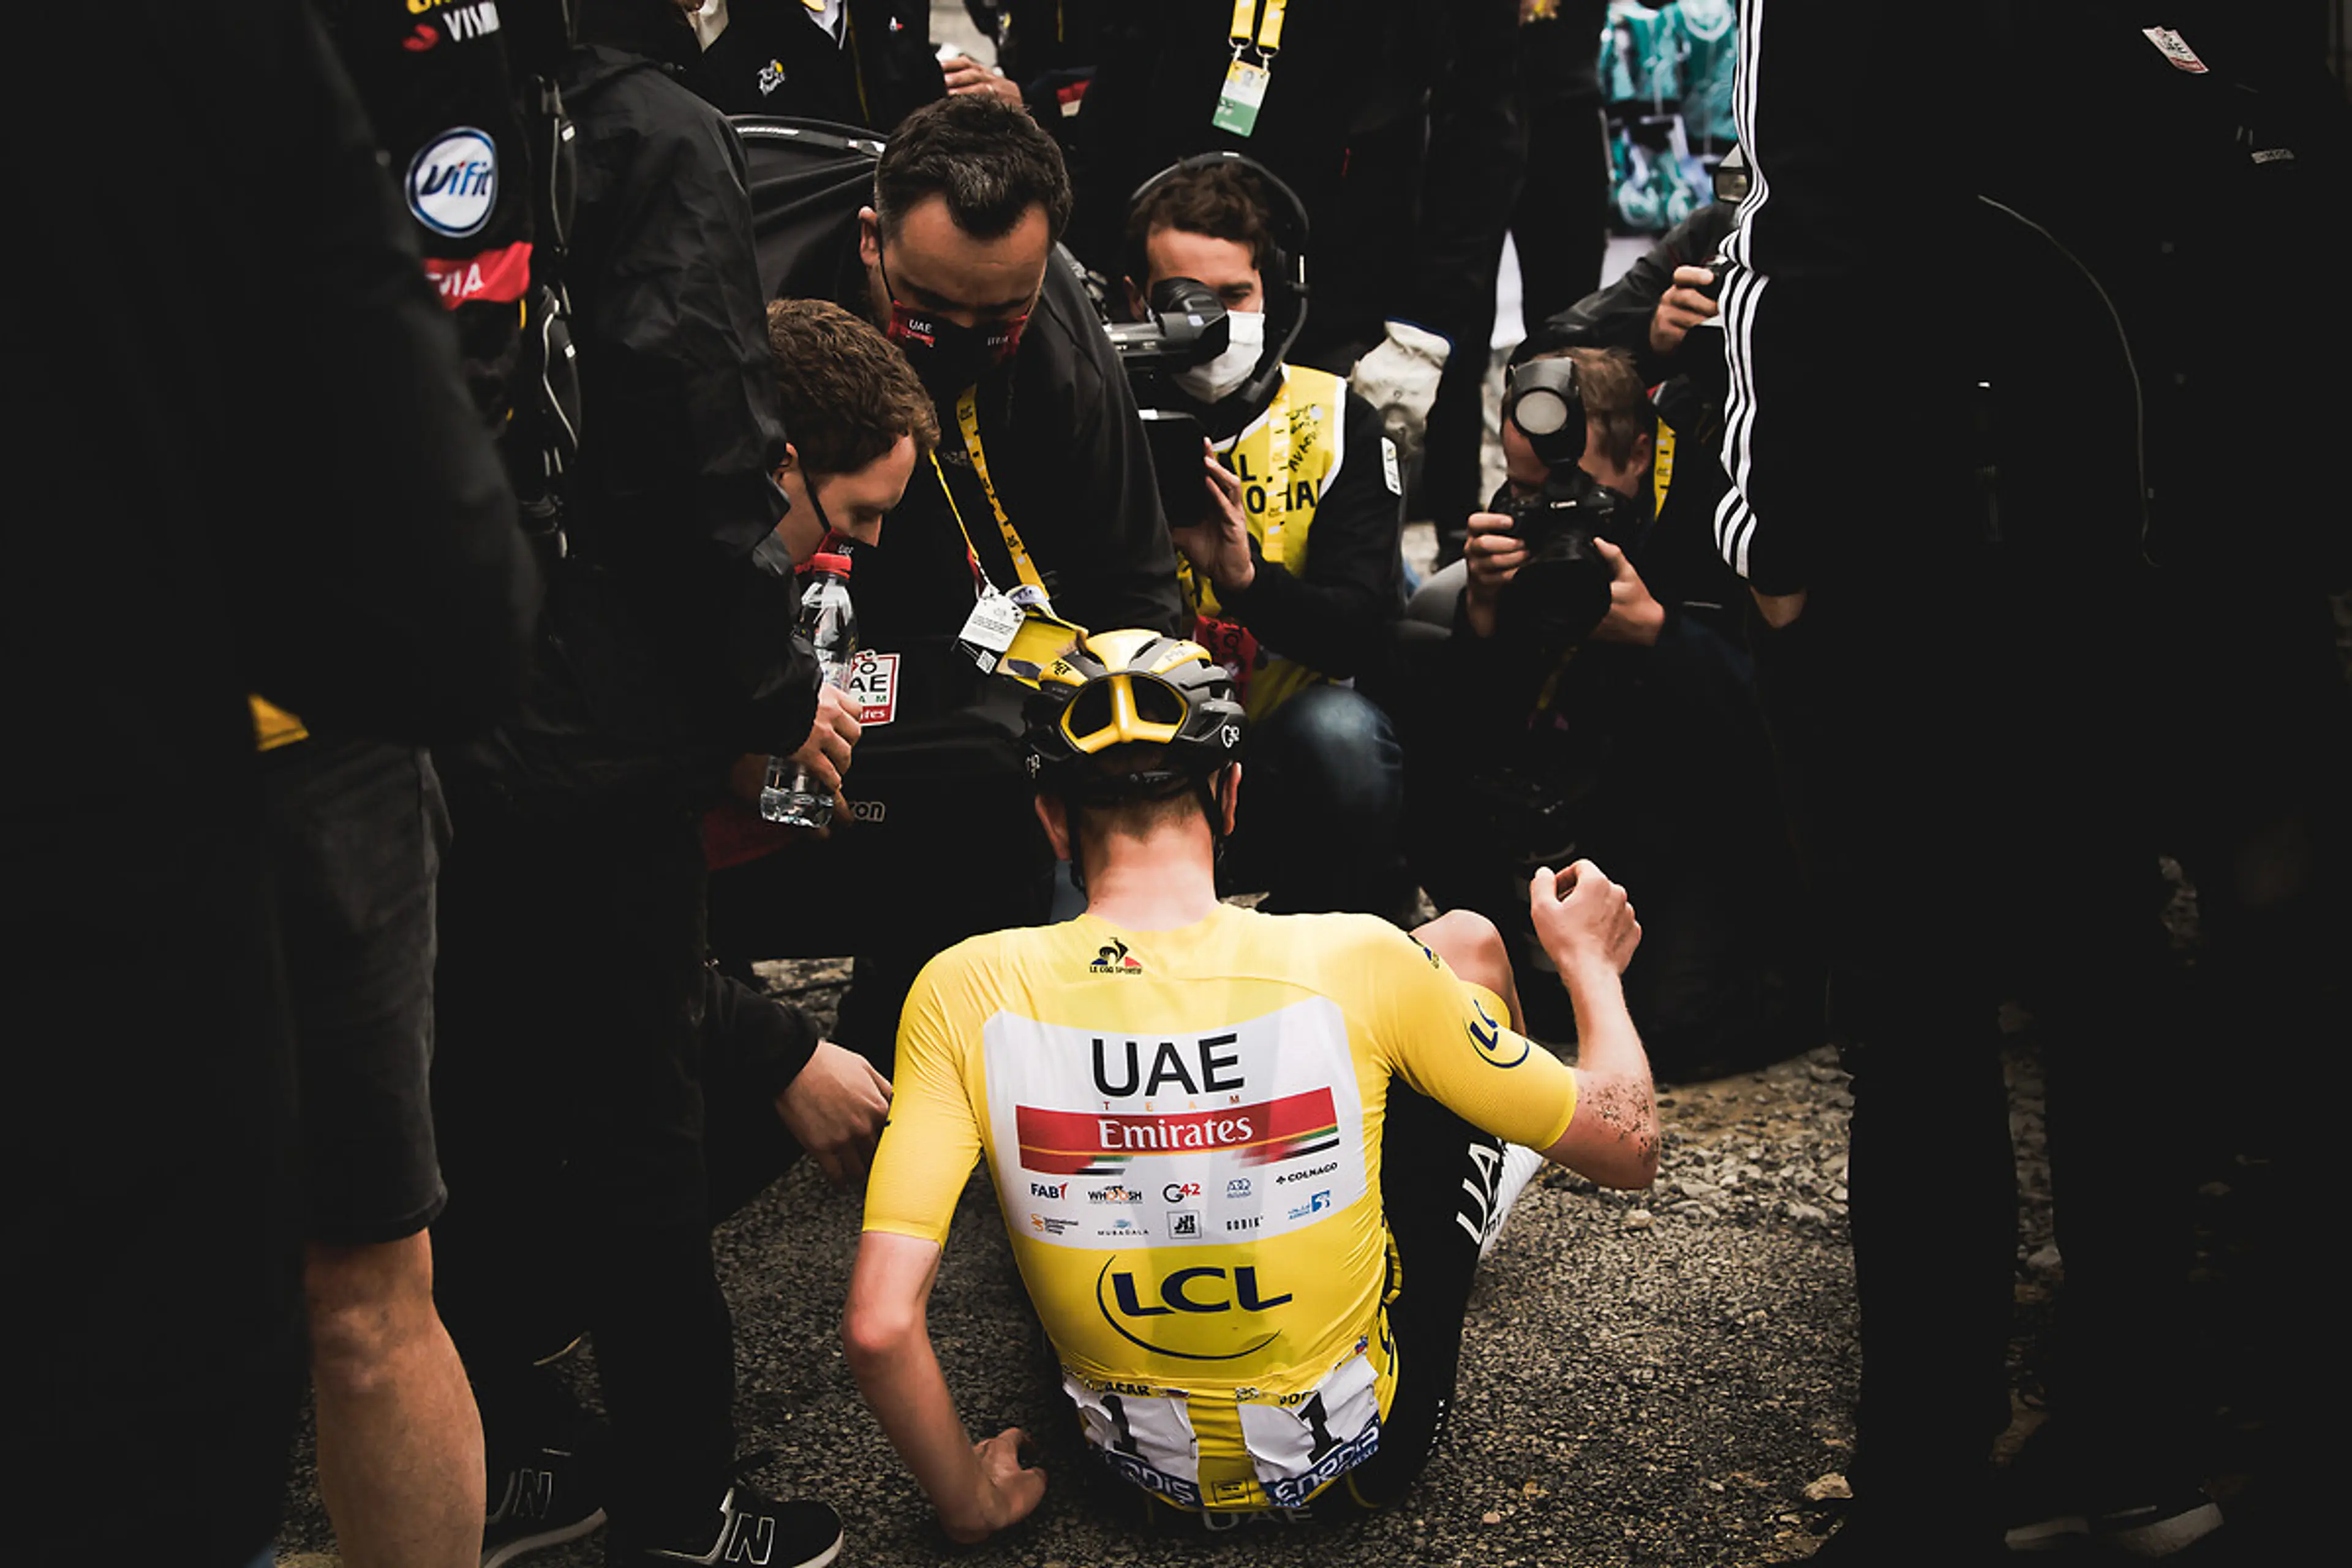 Tadej Pogacar (UAE TEAM EMIRATES) on the final day of Tour de France 2021